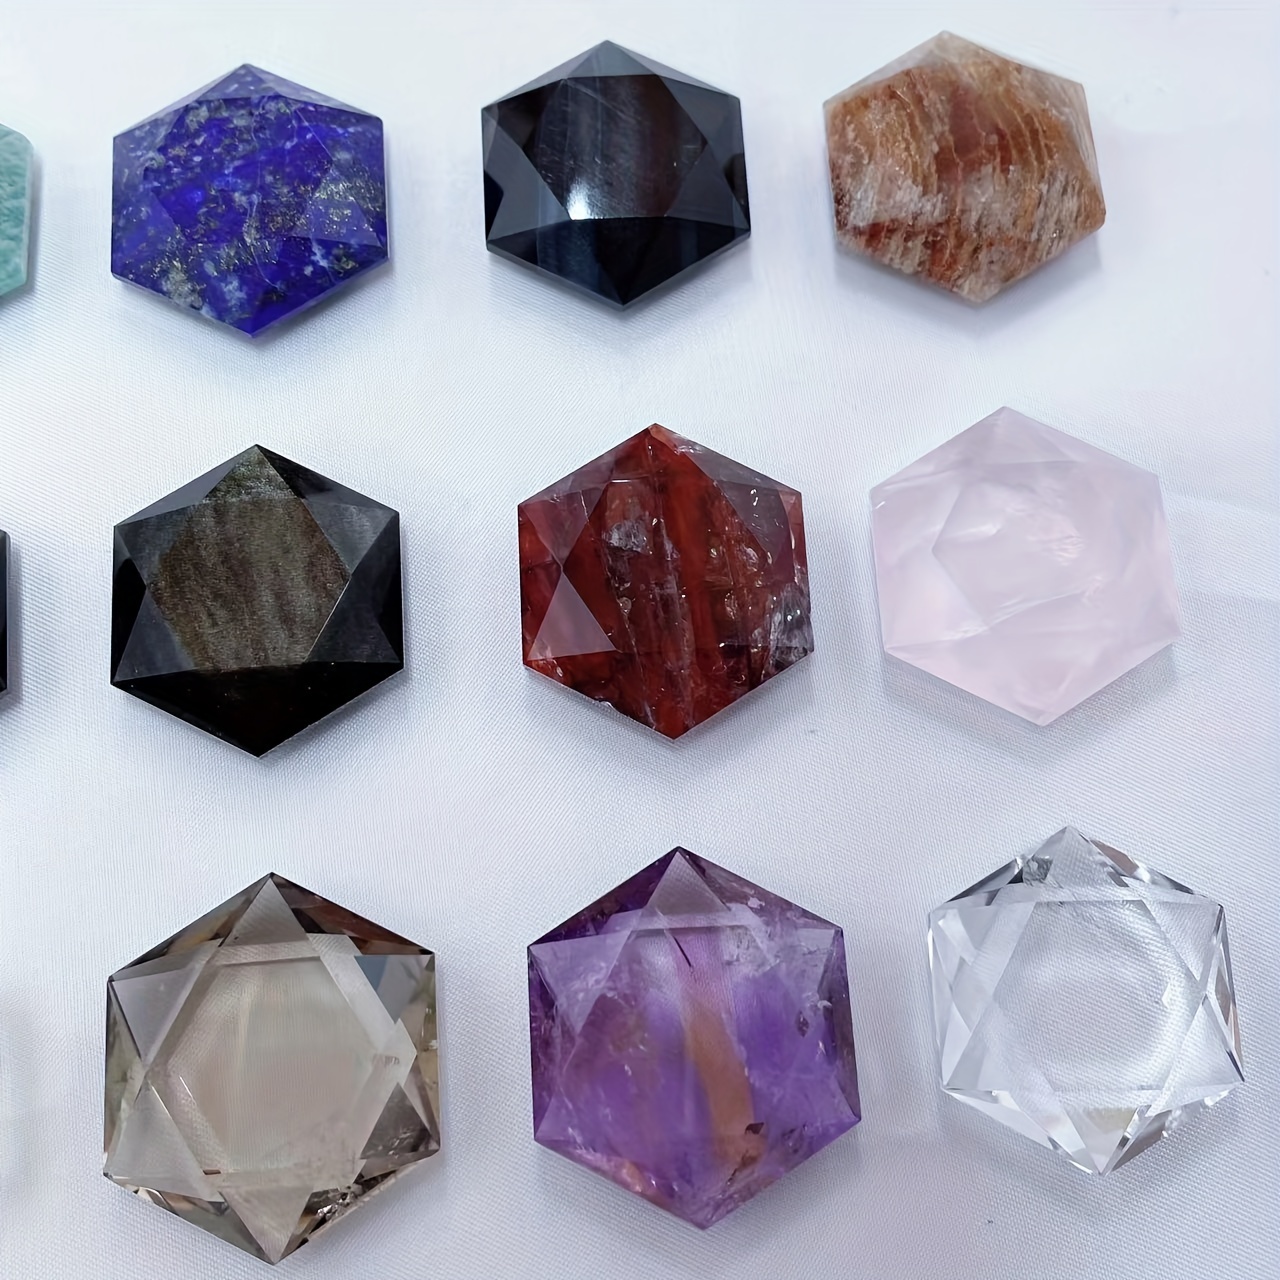 Acheter Reiki quartz pointu Hexagonal pierres précieuses